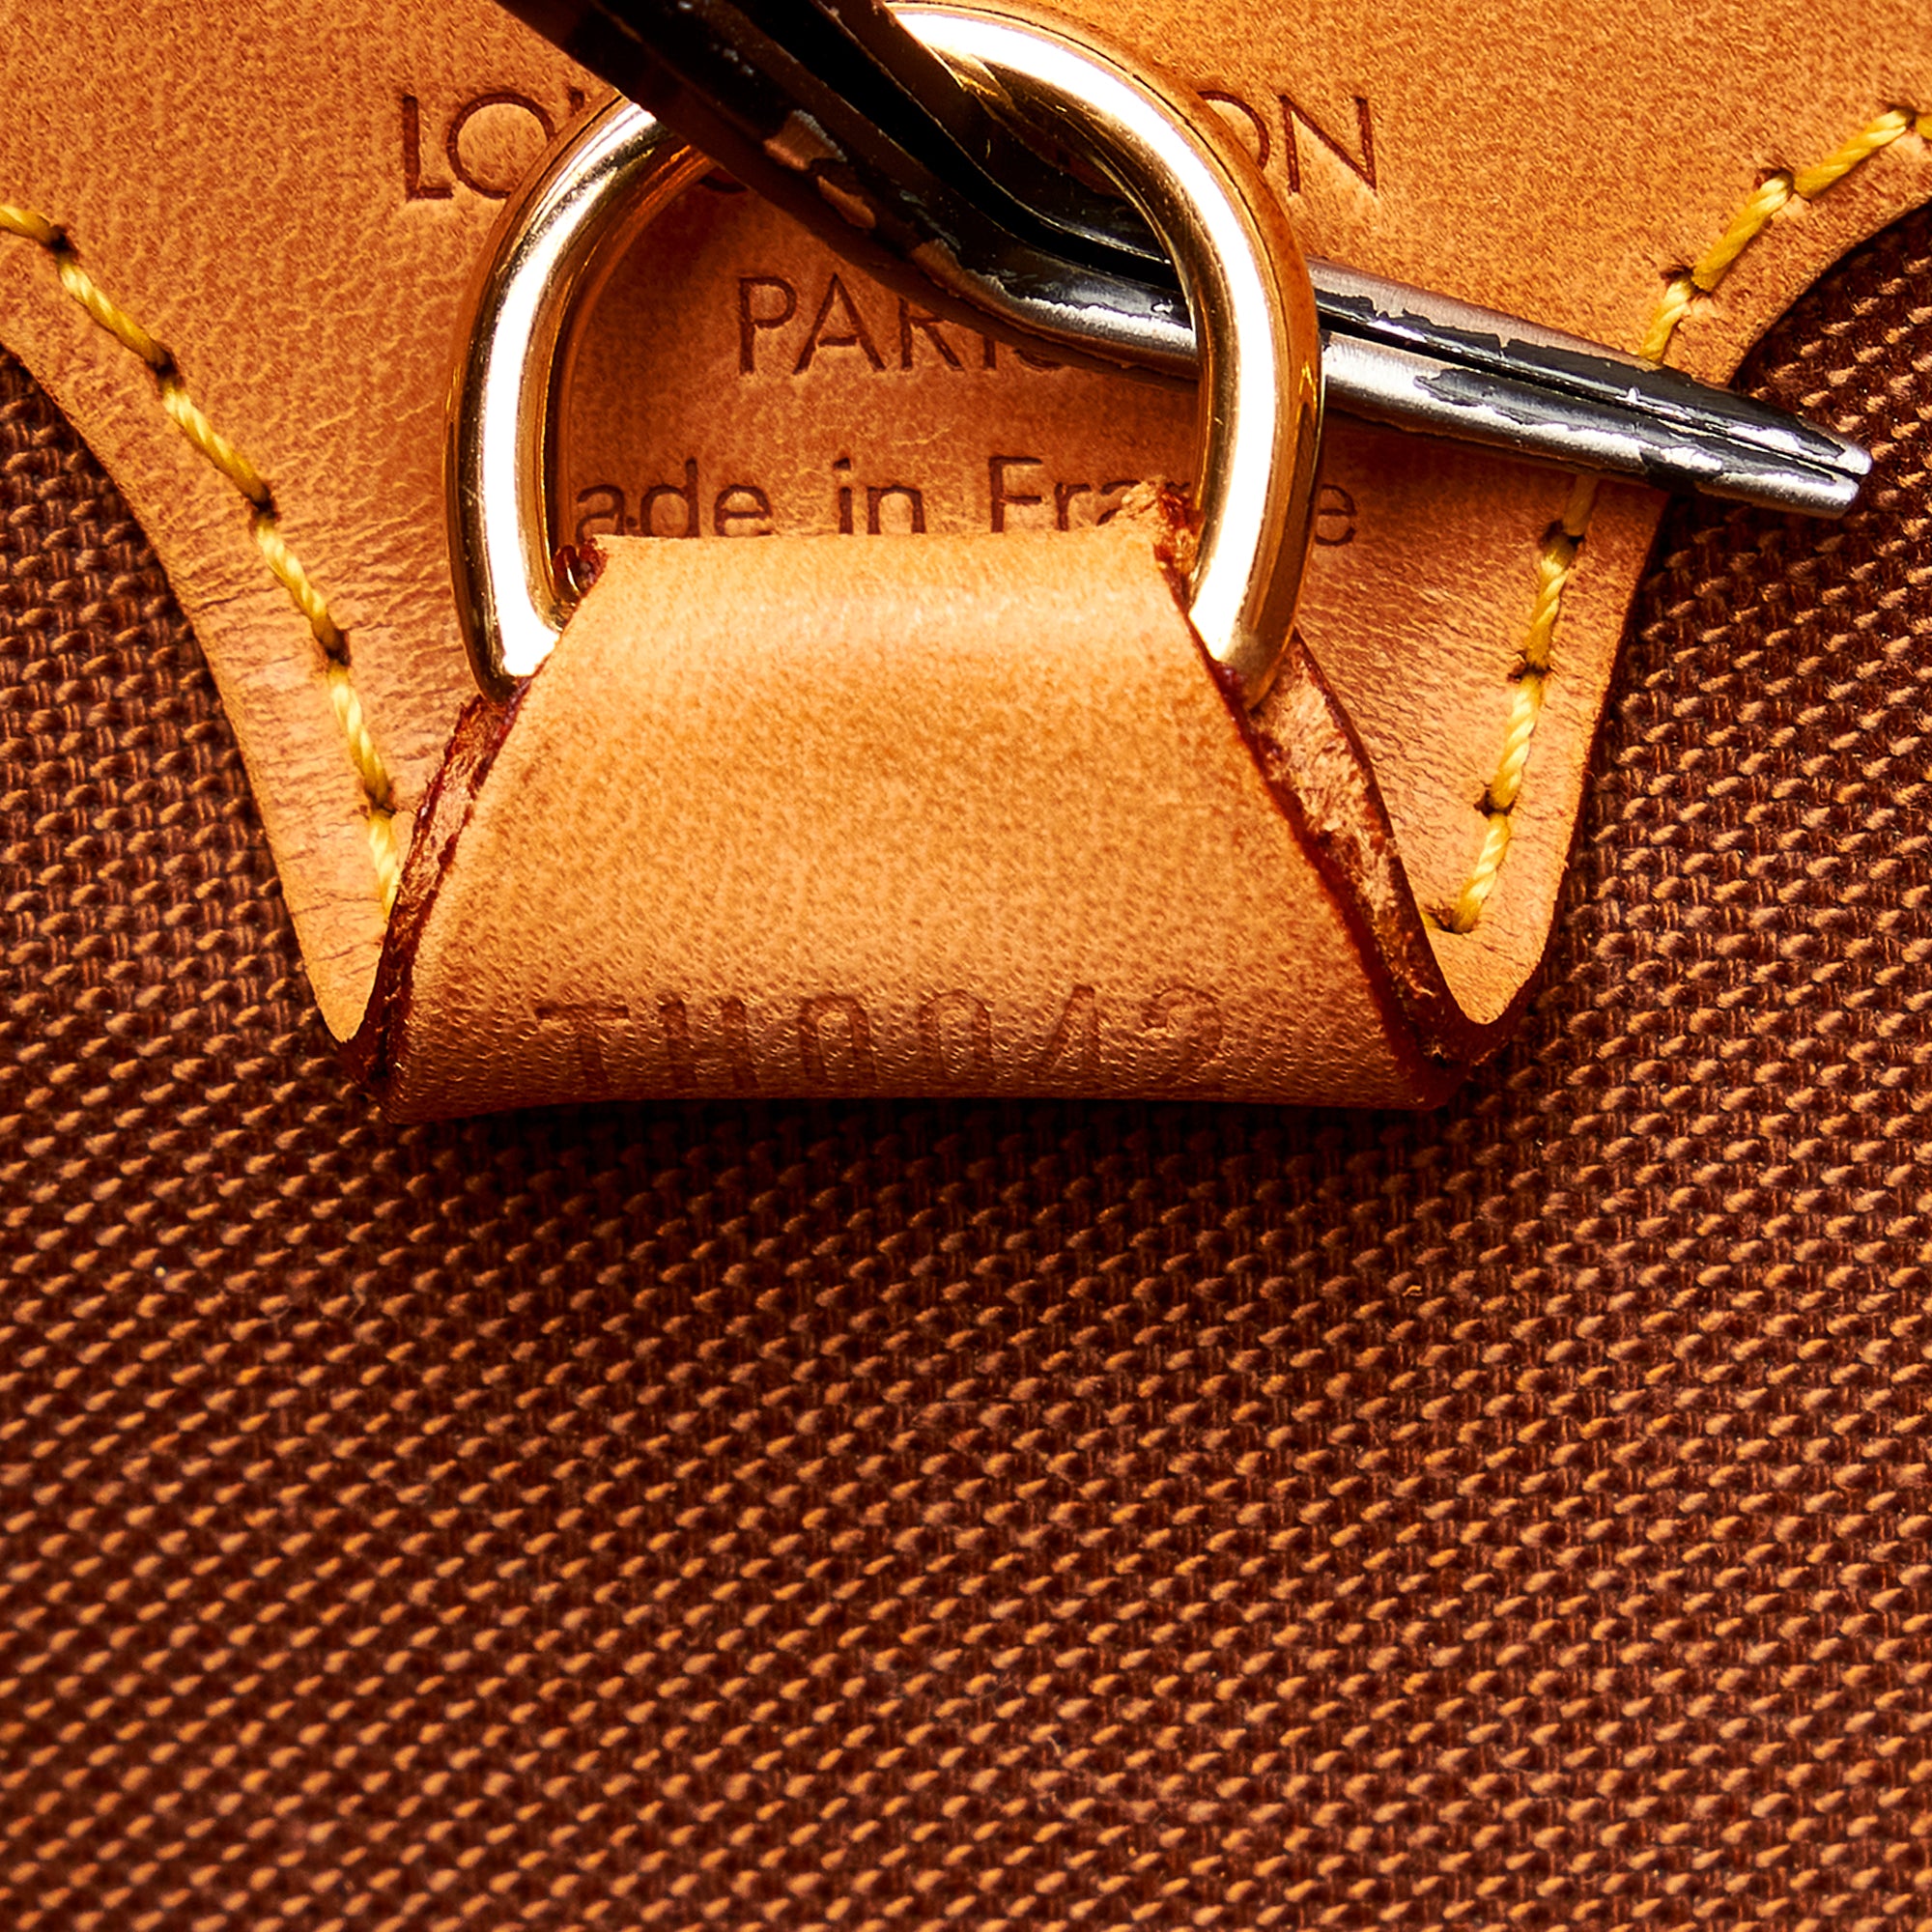 100% authenticity Guaranteed - Louis Vuitton Ellipse PM